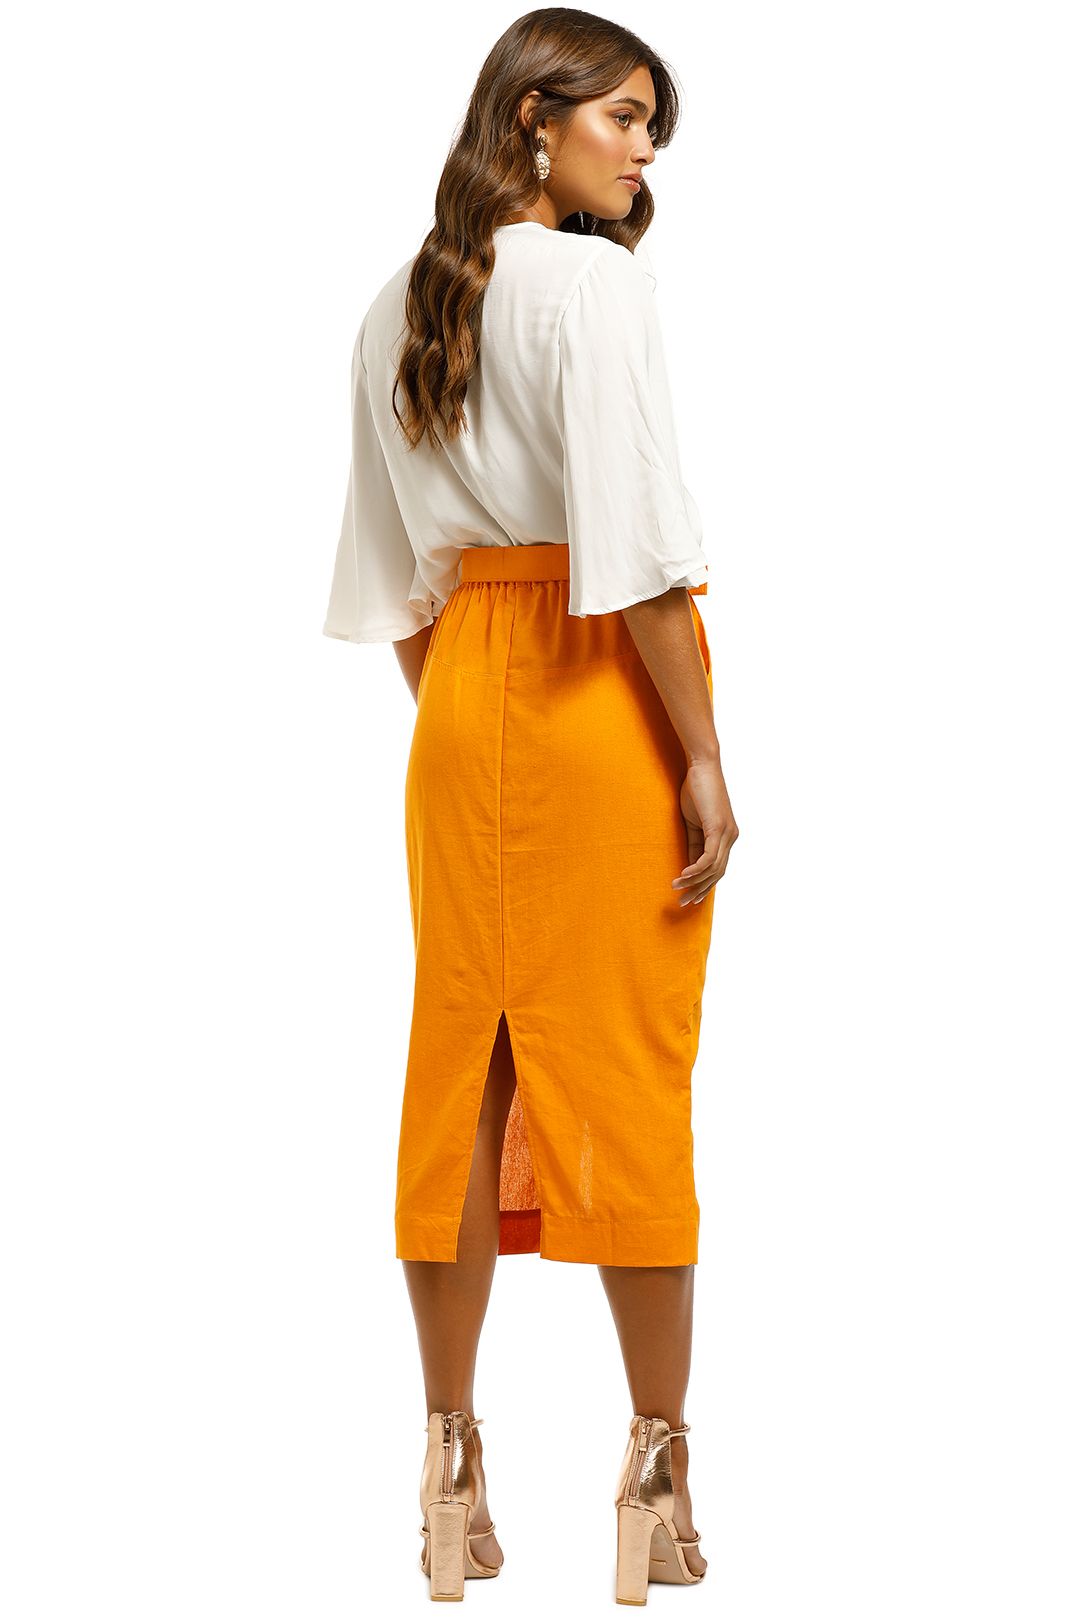 SWF-Orange-Pencil-Skirt-Orange-Back